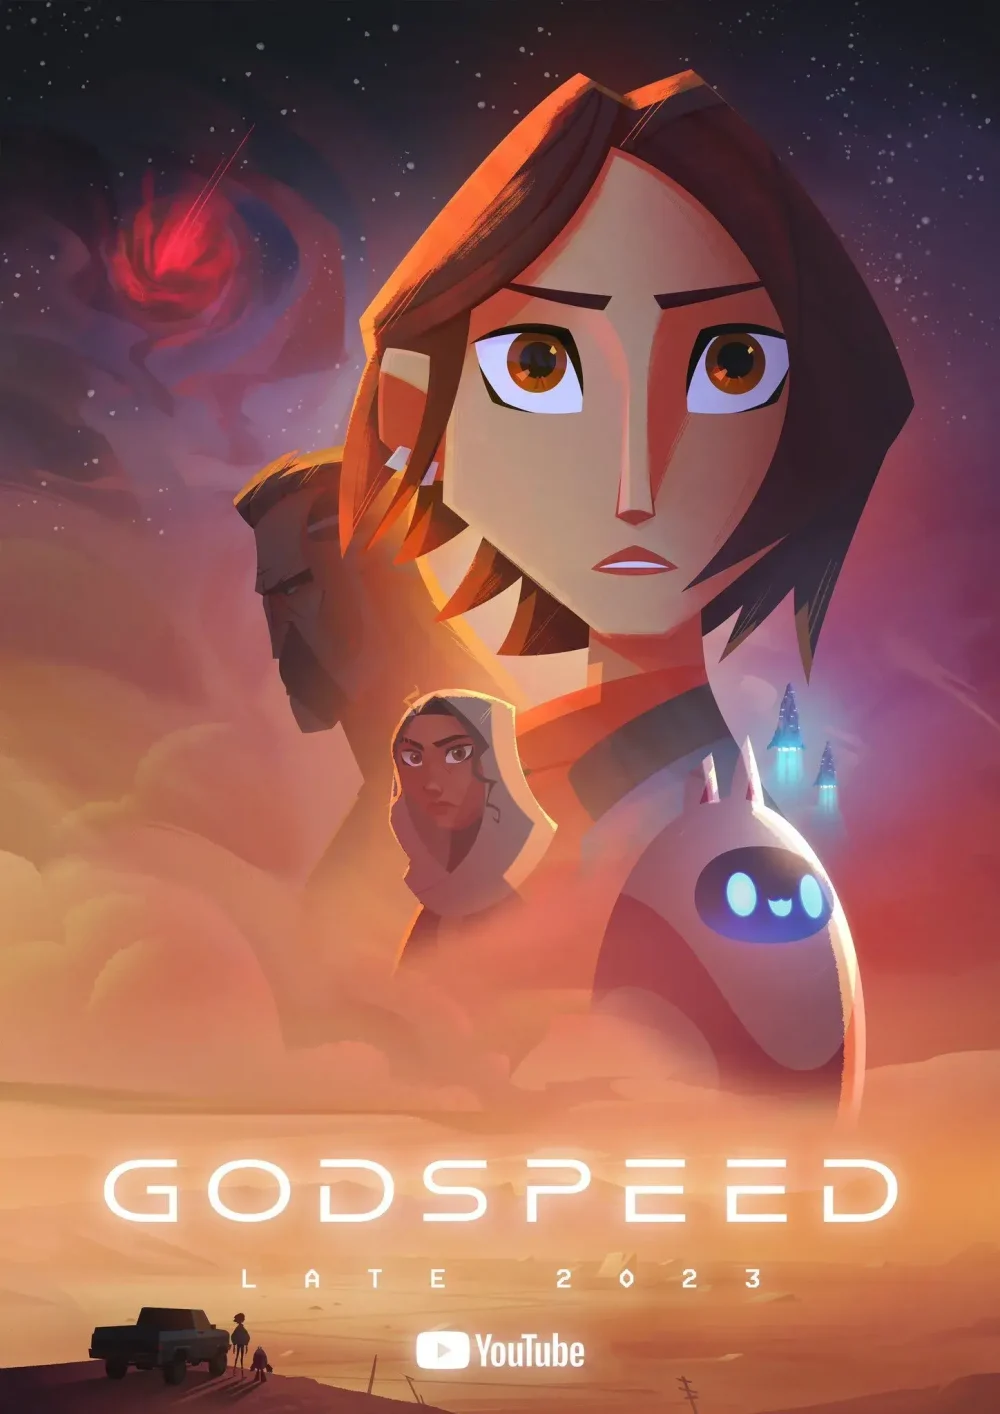 Godspeed (2023) Animation by 
Ben Bjelajac, USA